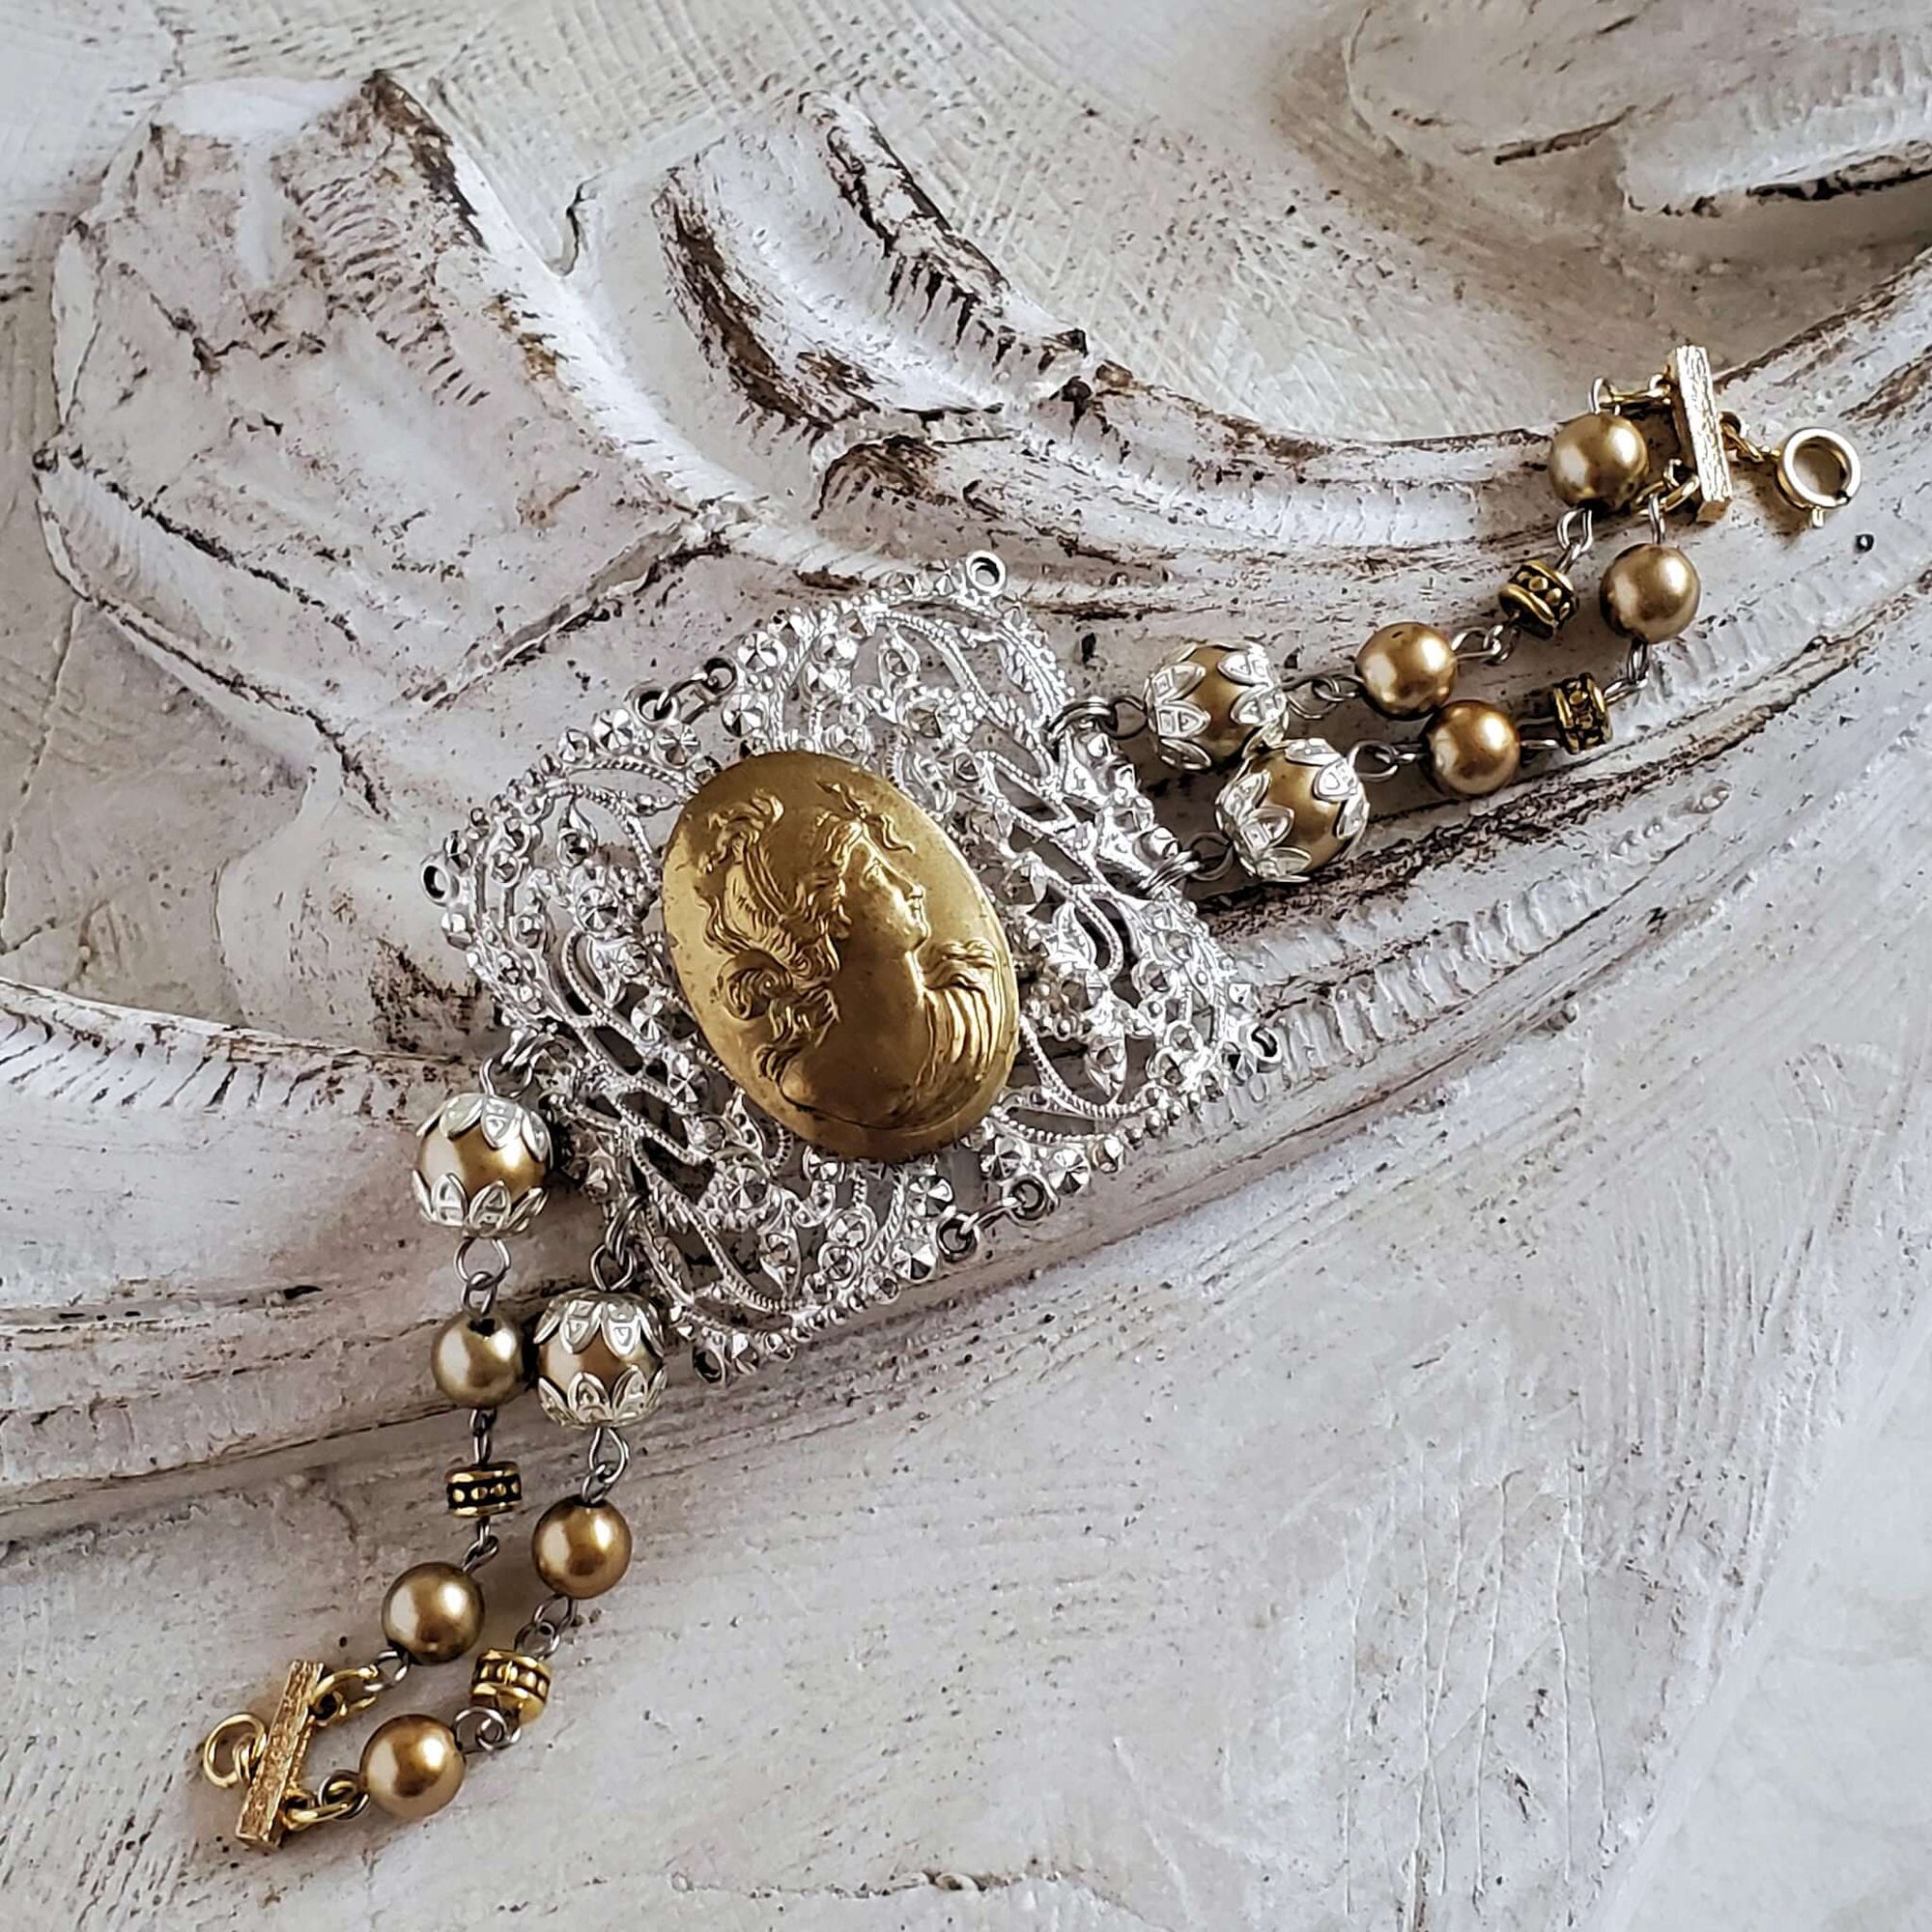 Vintage Assemblage Bracelet with Antique Buckle , Vintage Cameo and Vintage Beads